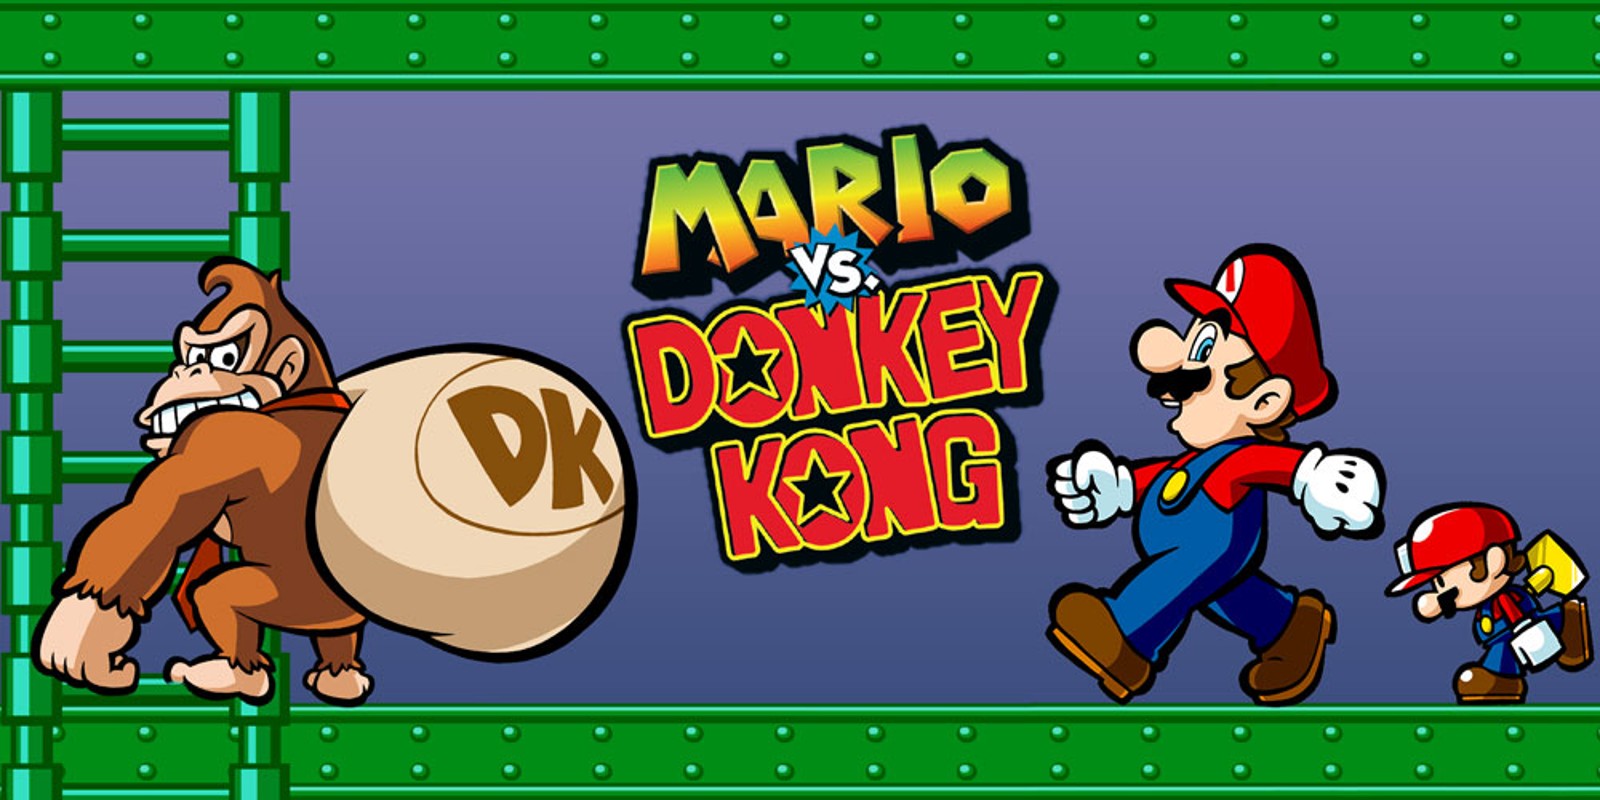 Legend of Zelda and Donkey Kong mobile games